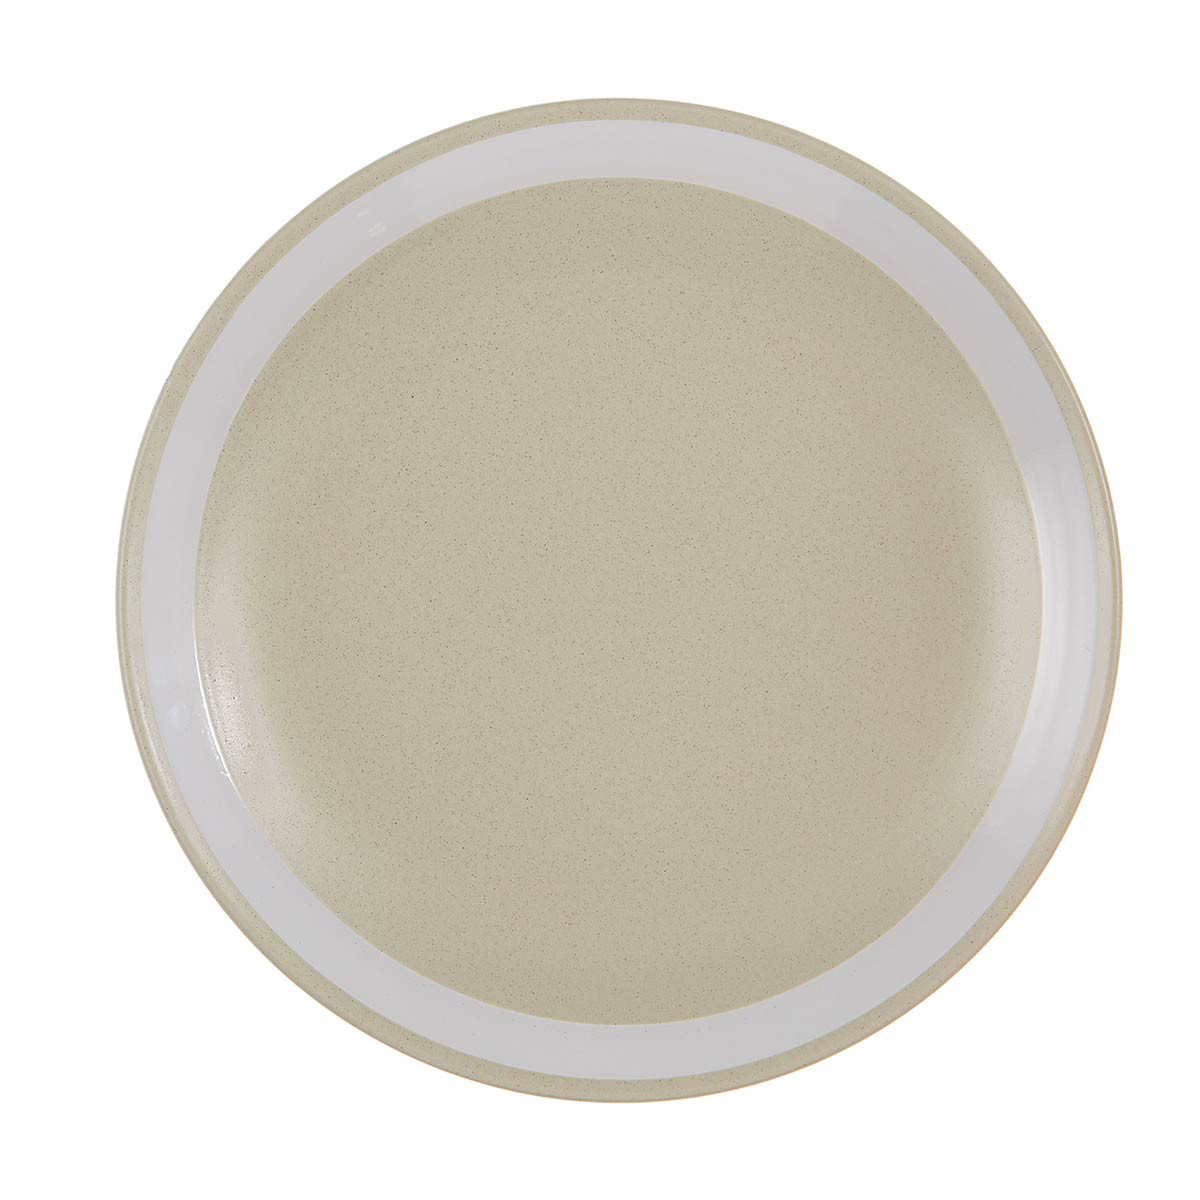 2-tone Dinner Plate, Sand & White, 10.5 in